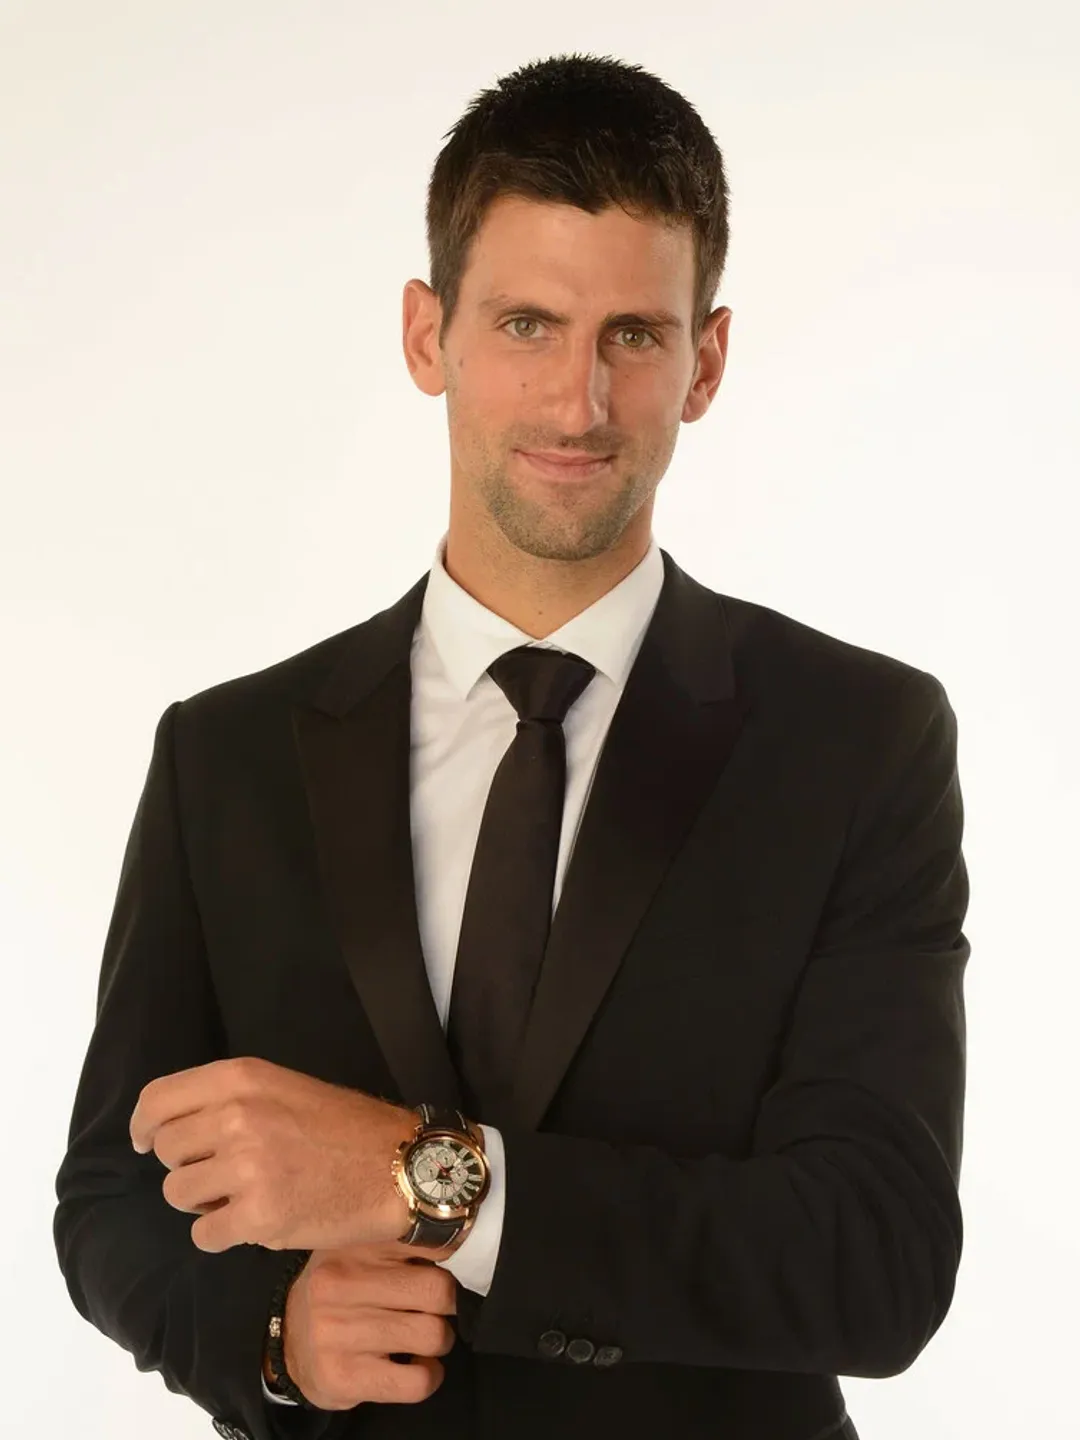 Novak Djokovic in his youth